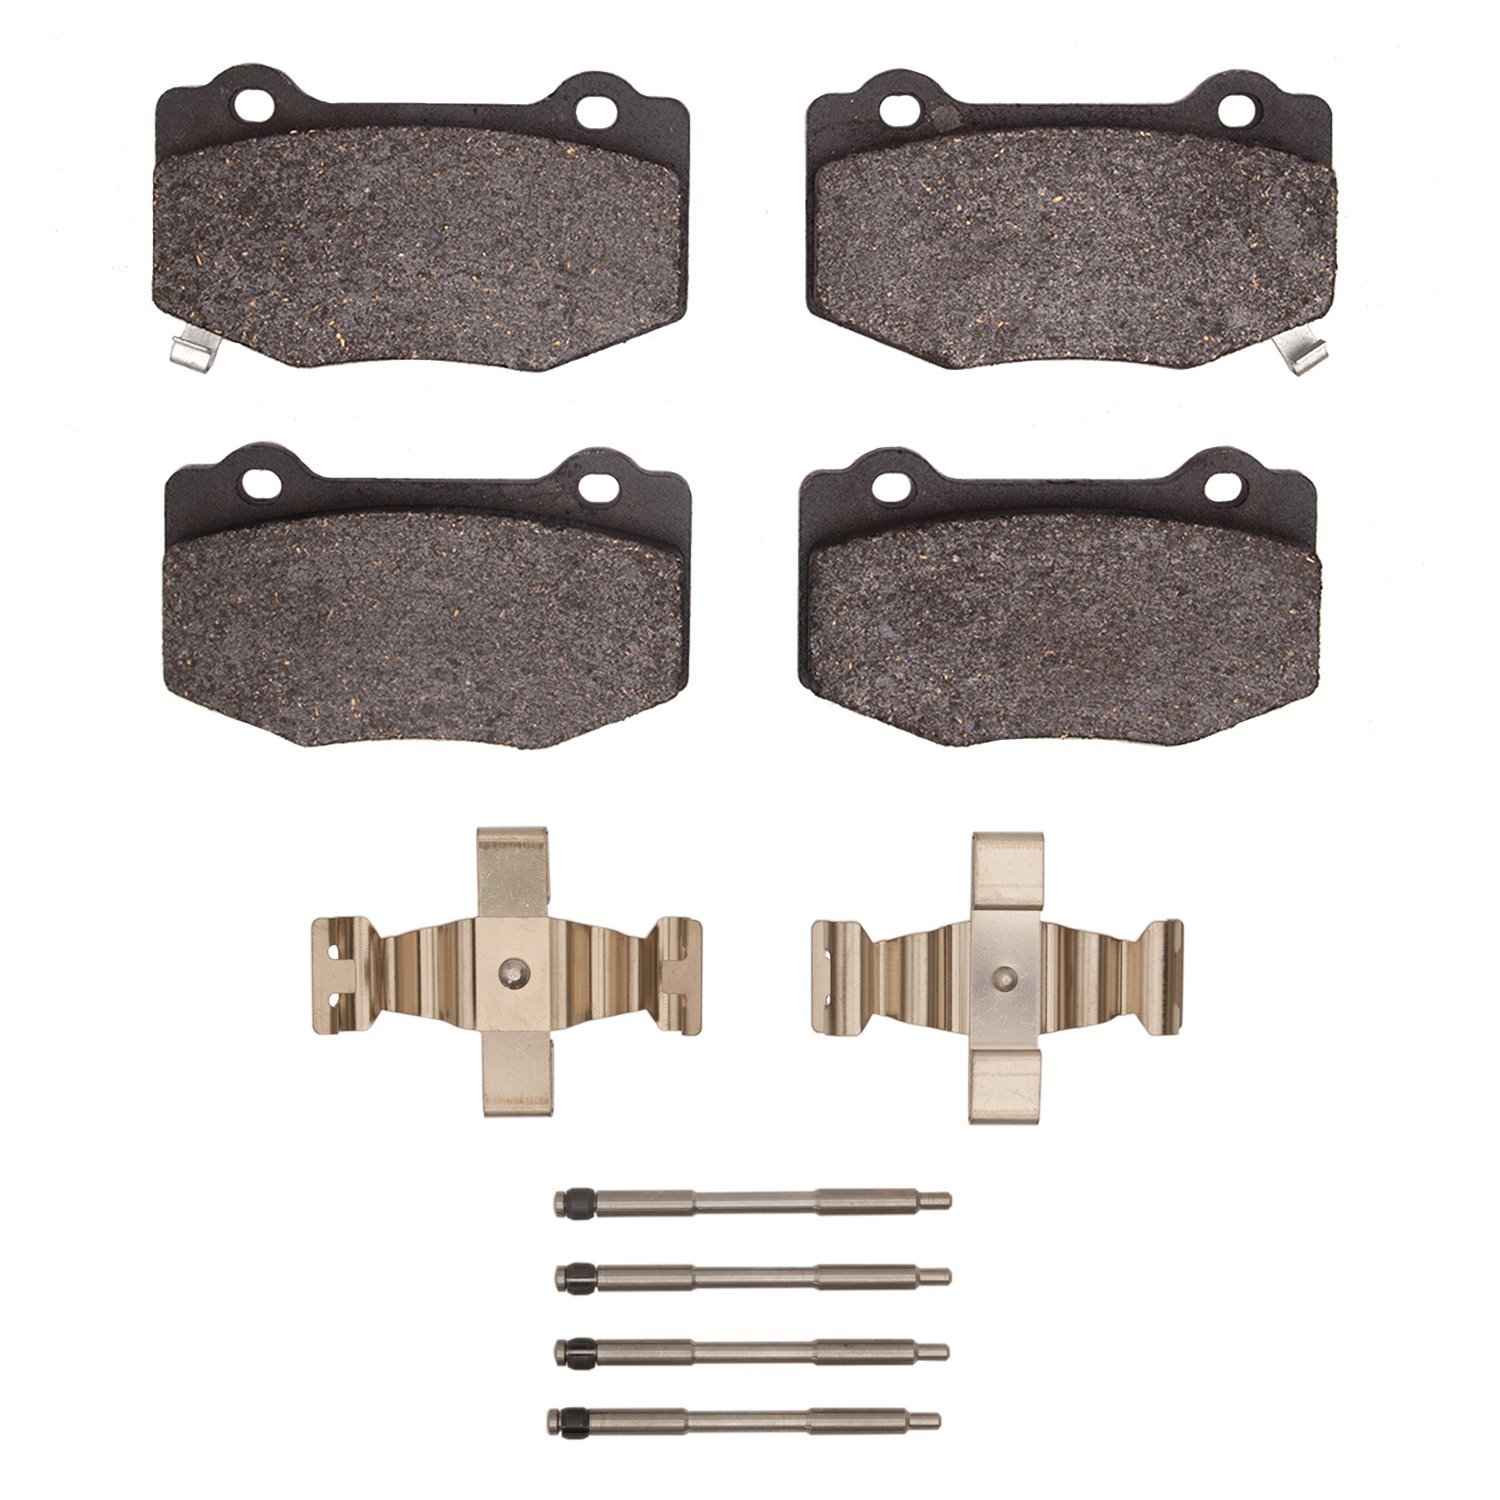 1551-1718-01 5000 Advanced Ceramic Brake Pads & Hardware Kit, Fits Select GM, Position: Rear